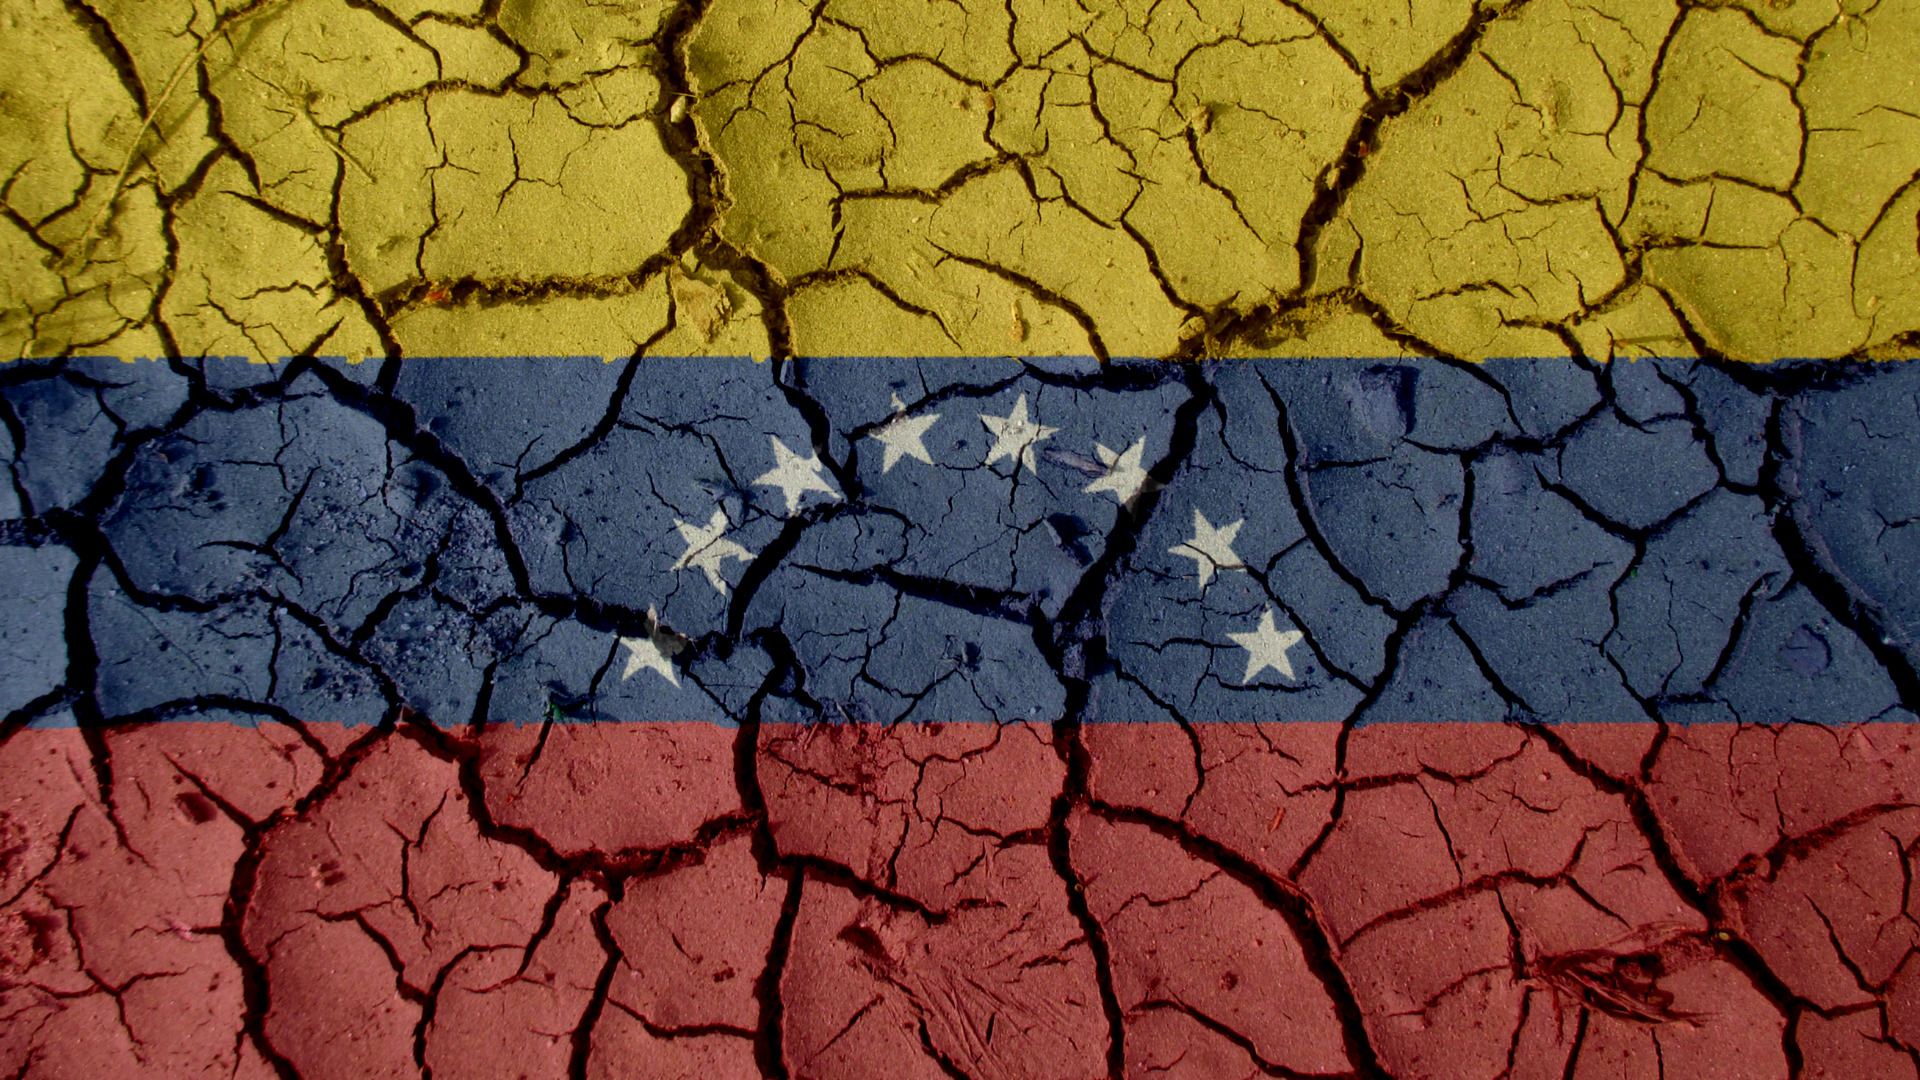 Venezuela: And so it begins